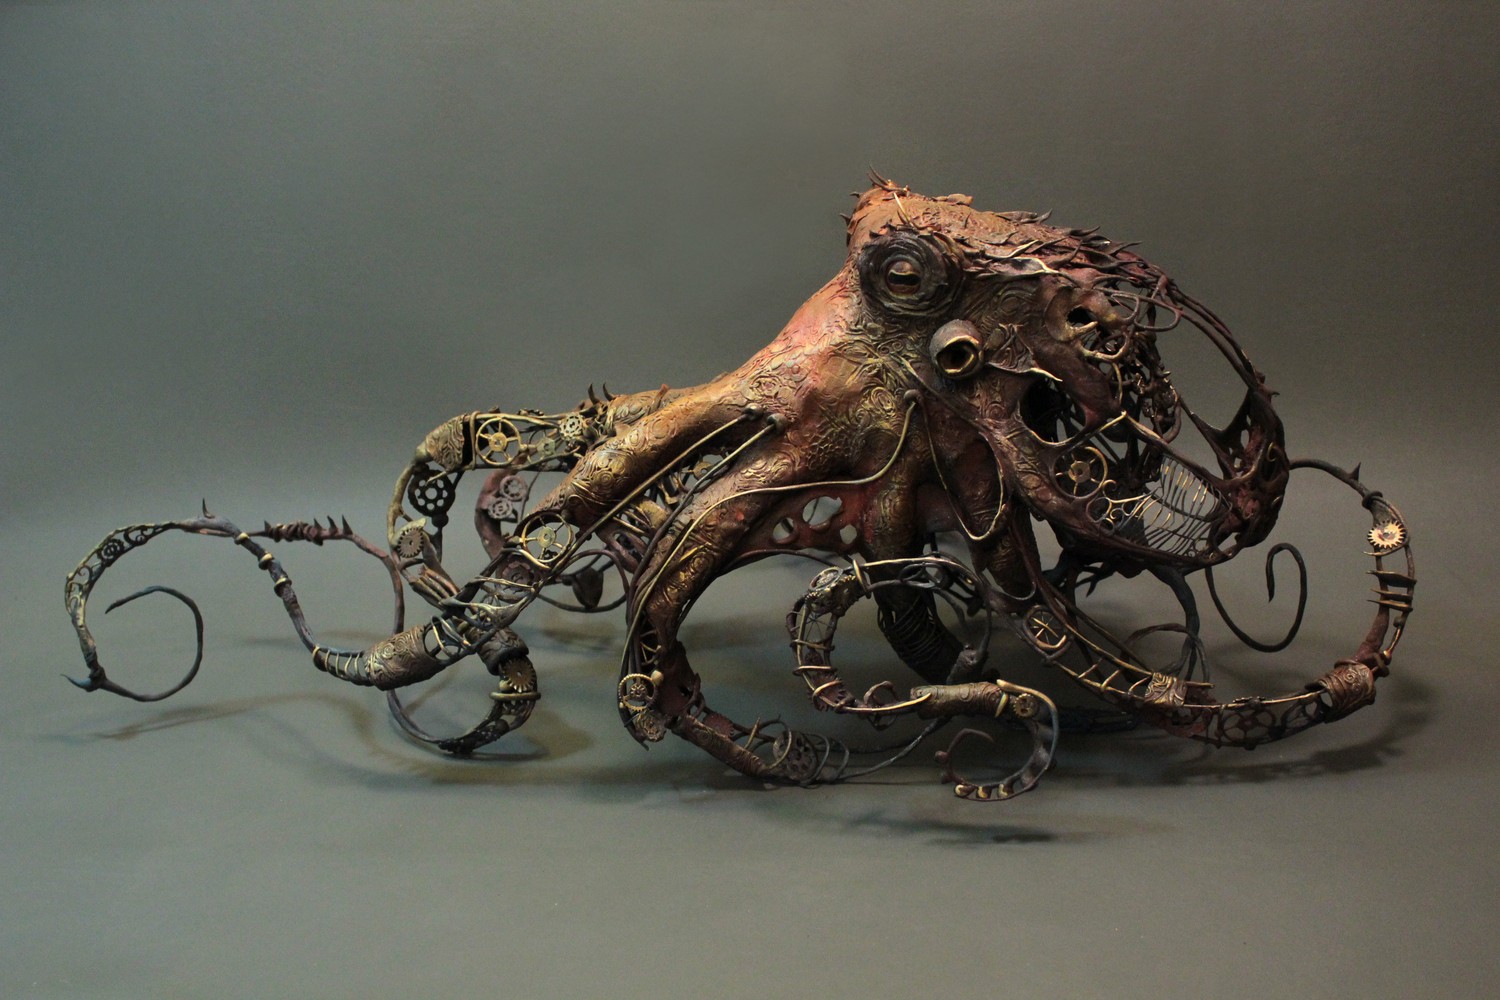 General 1500x1000 animals octopus steampunk metal gears artwork shadow sculpture gray background